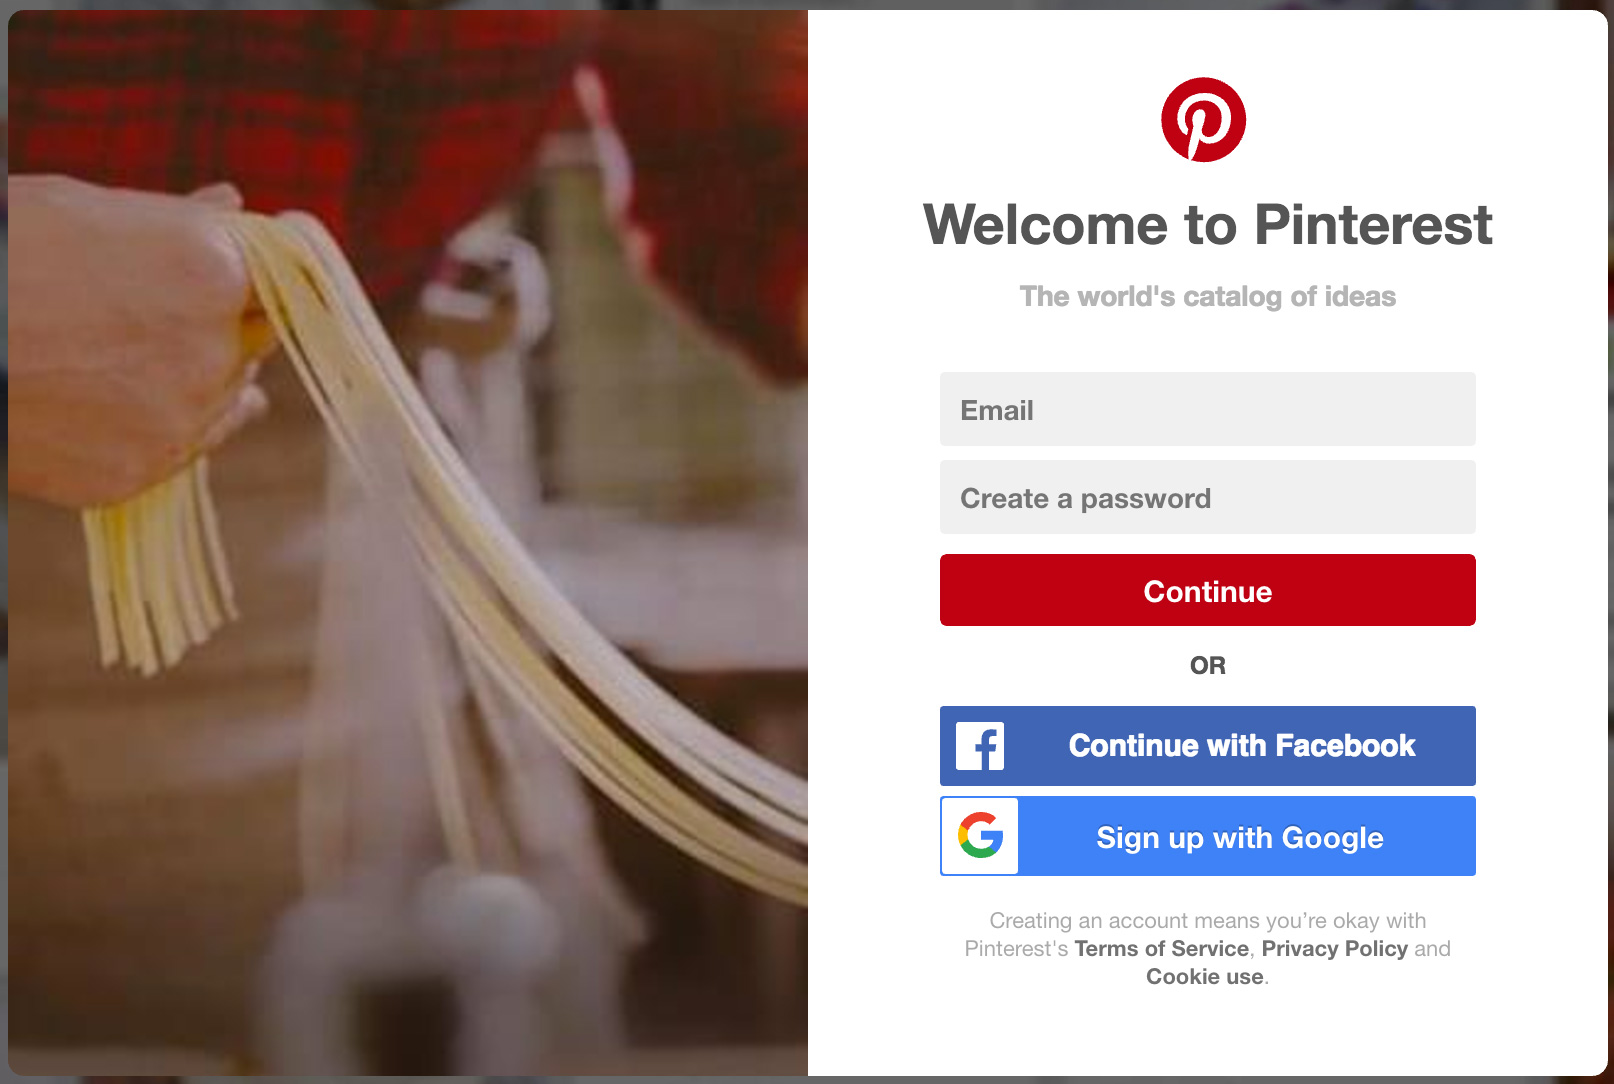 volwassene ongerustheid elegant Pinterest Login and Sign up guide - Get started with Pinterest